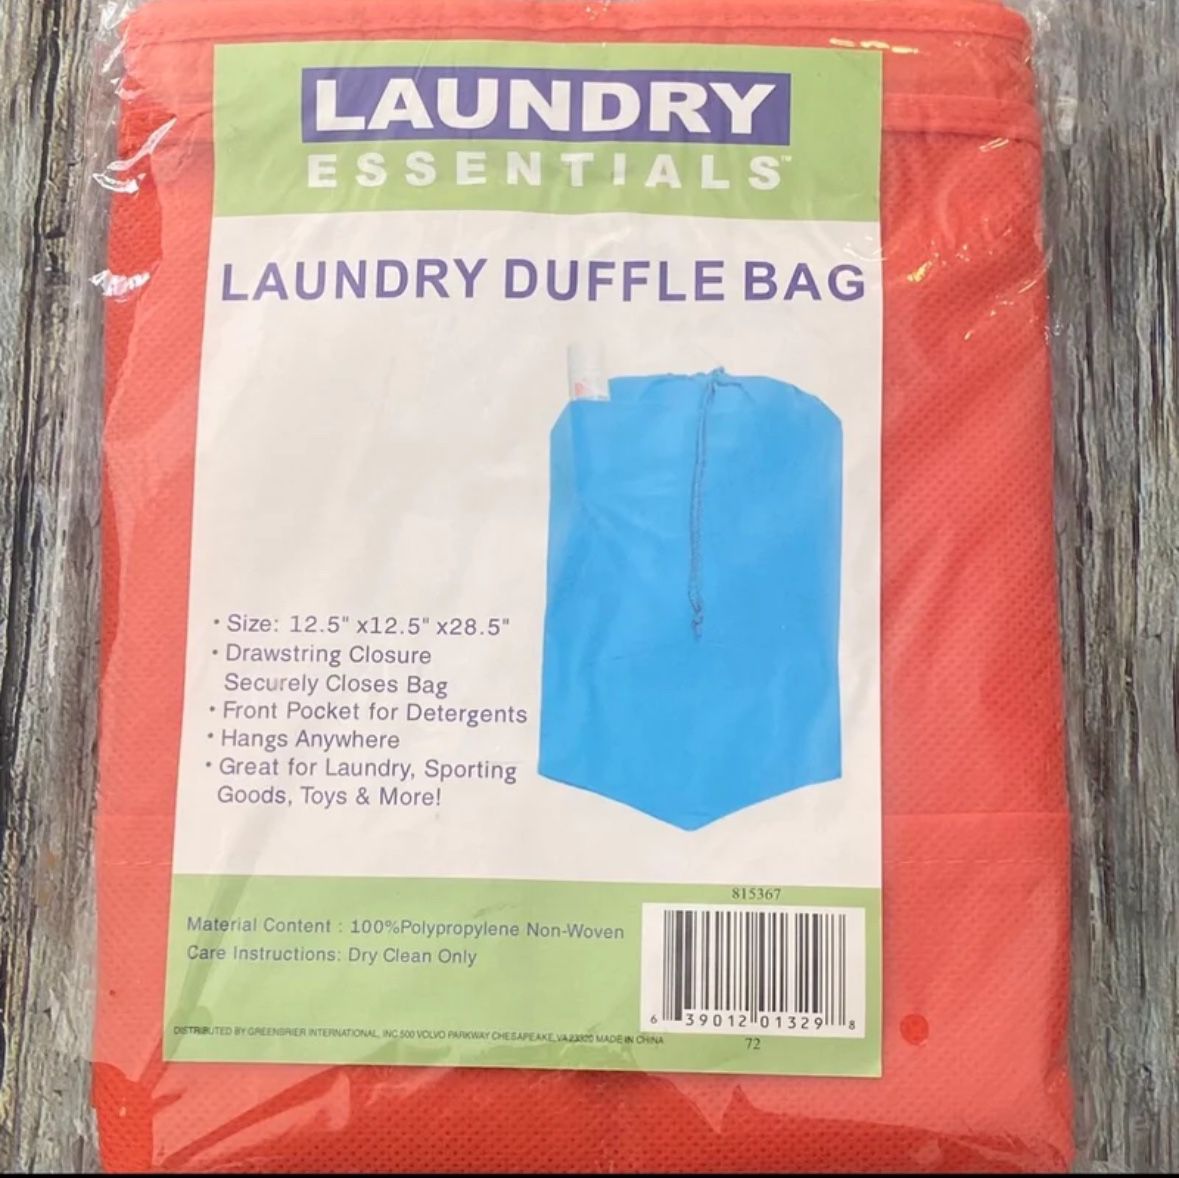 New Orange Drawstring Laundry Duffel Bag